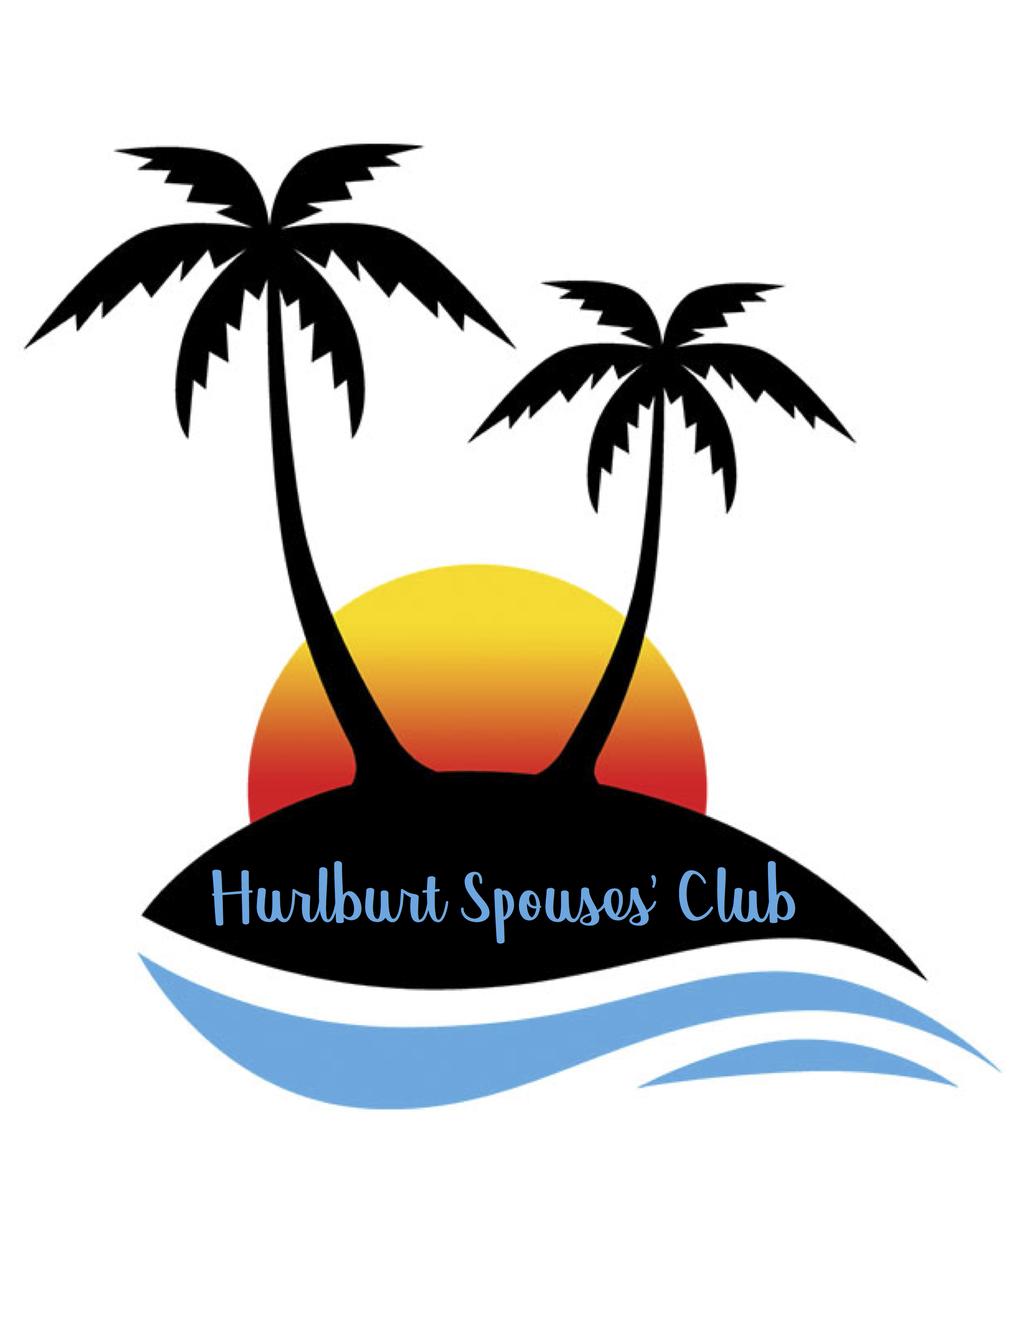 HURLBURT SPOUSES CLUB TURNAROUND SCHOLARSHIP The Hurlburt Spouses Club is pleased to offer scholarships to select Air Force dependents of Hurlburt Field.